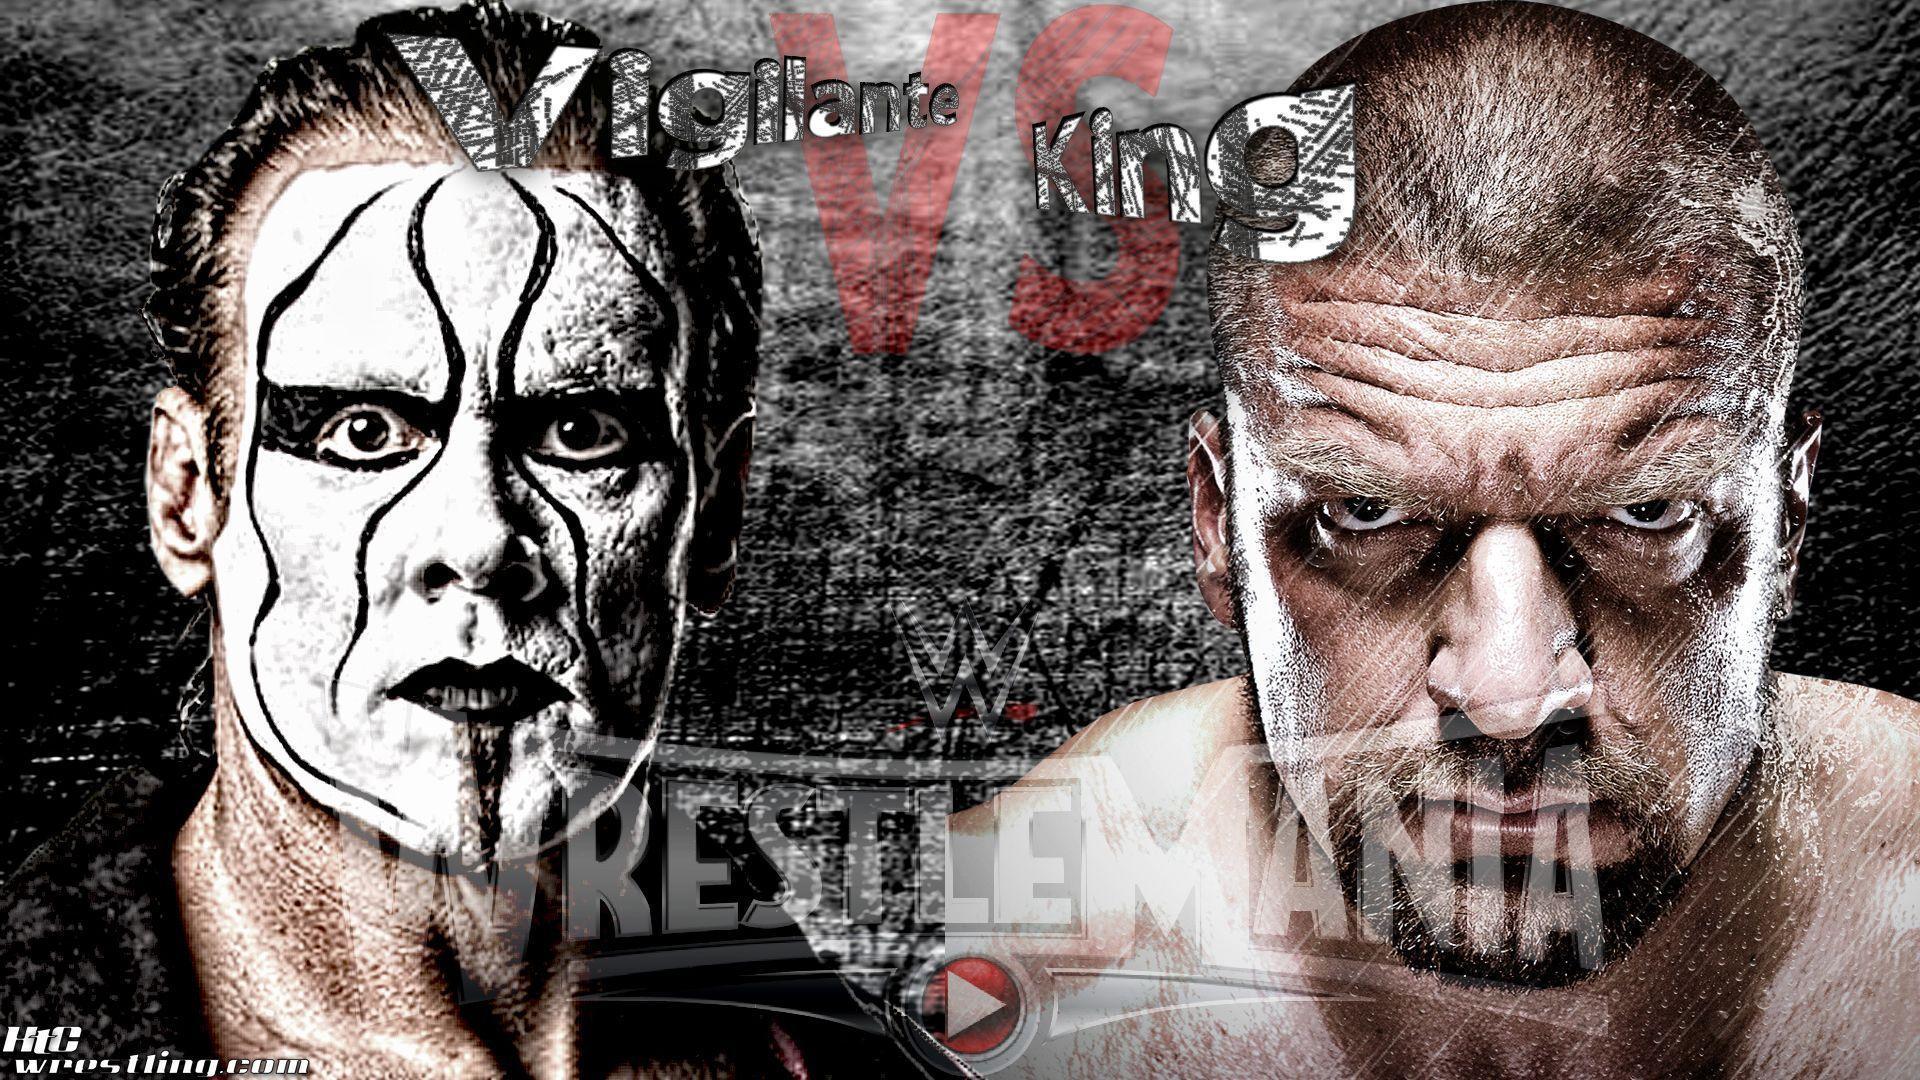 WrestleMania Wallpaper: “Vigilante vs King”